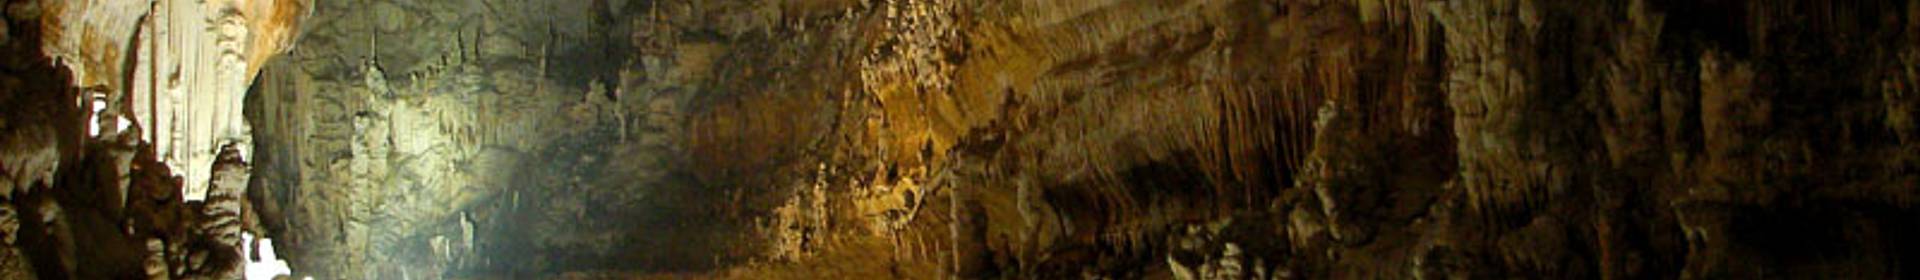 Grottes de Jeita